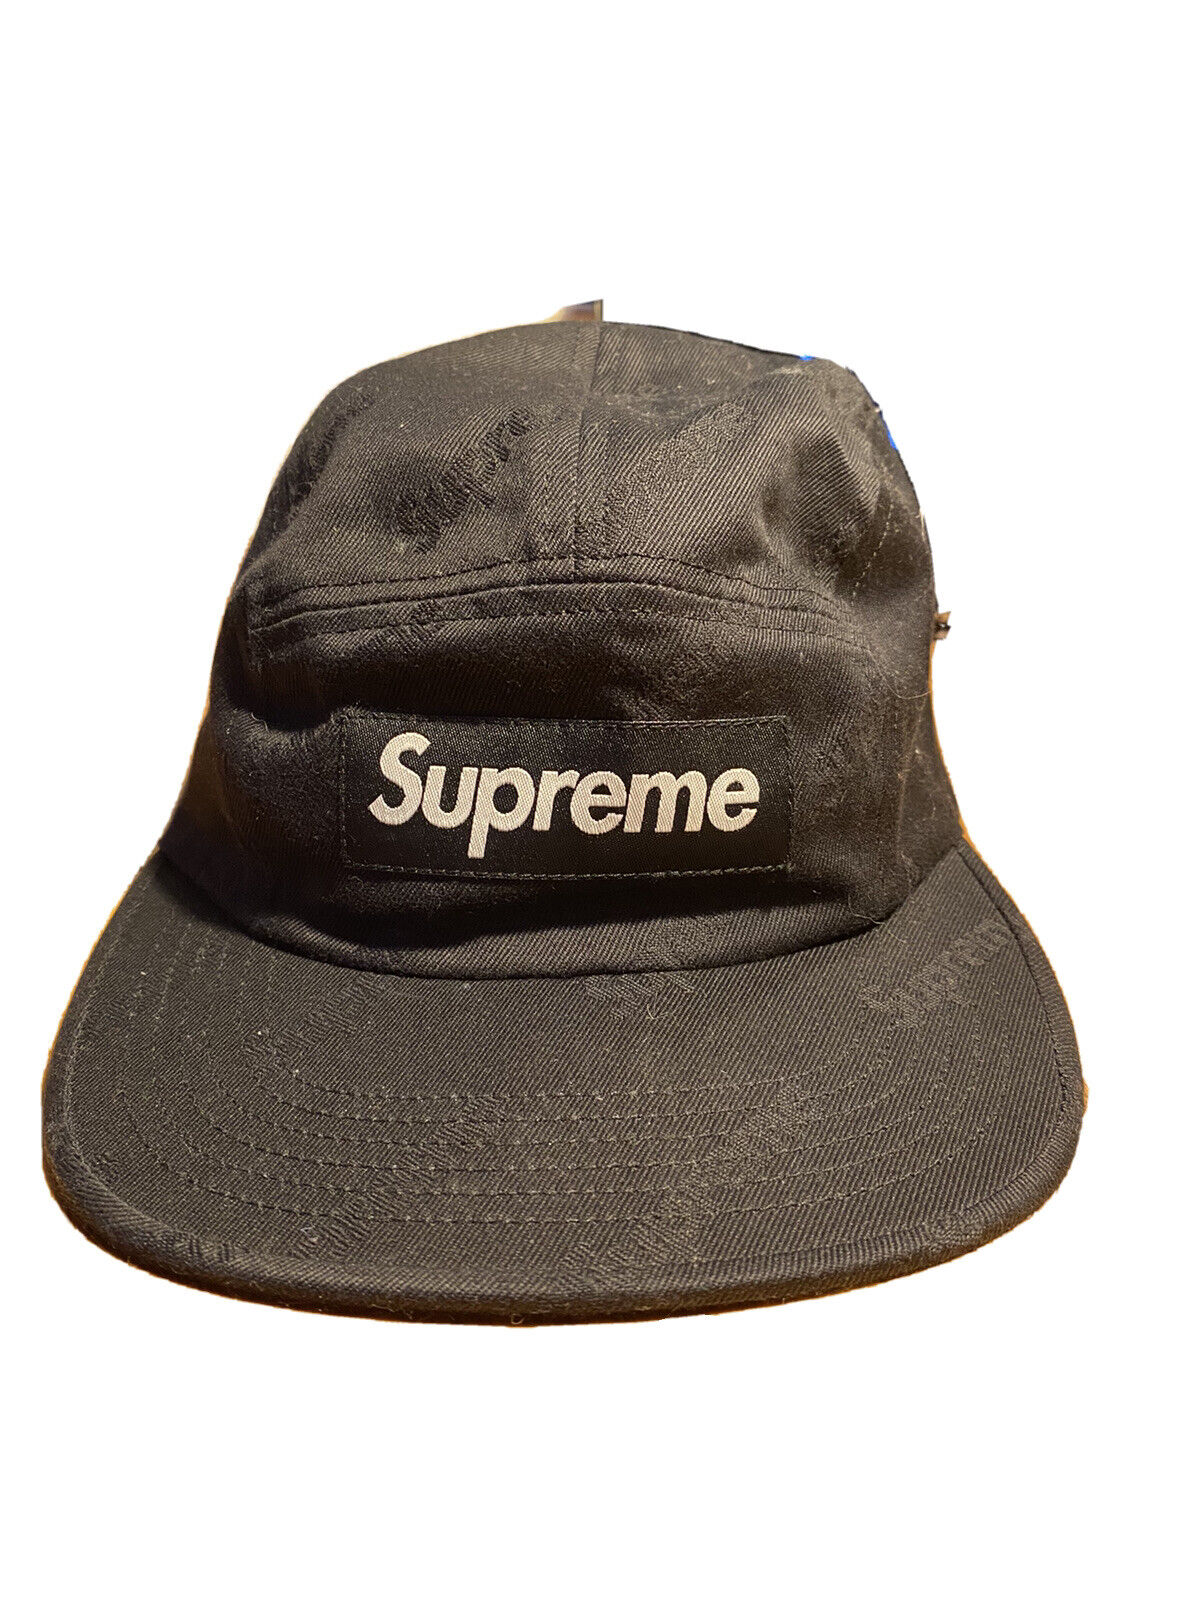 supreme black hat authentic - image 1